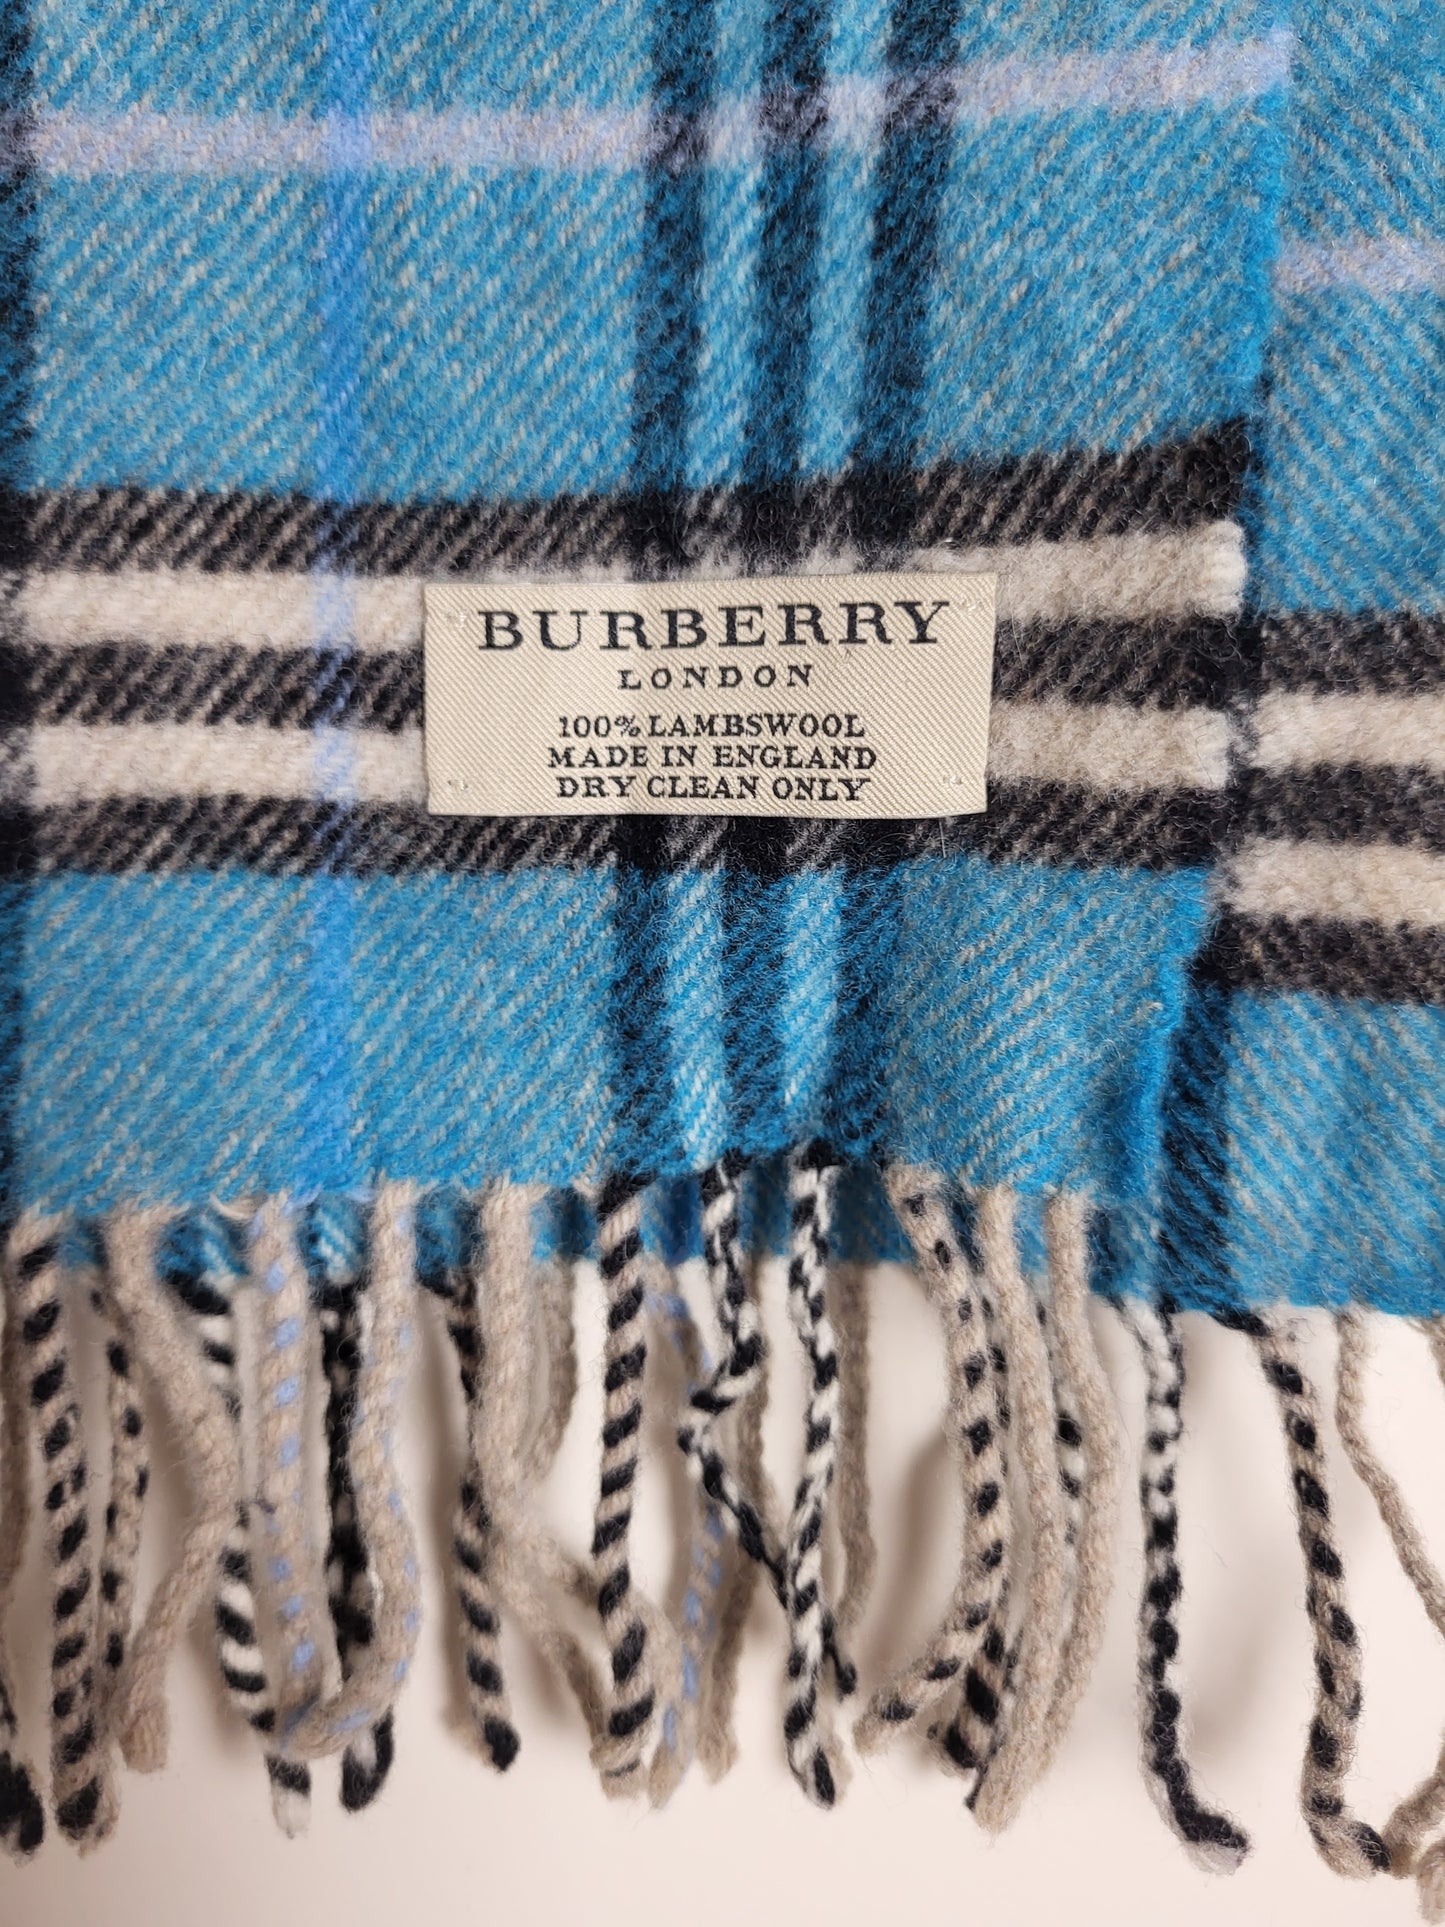 Burberry London - Vintage Schal - Türkis Tartan - Lammwolle - 130 x 24